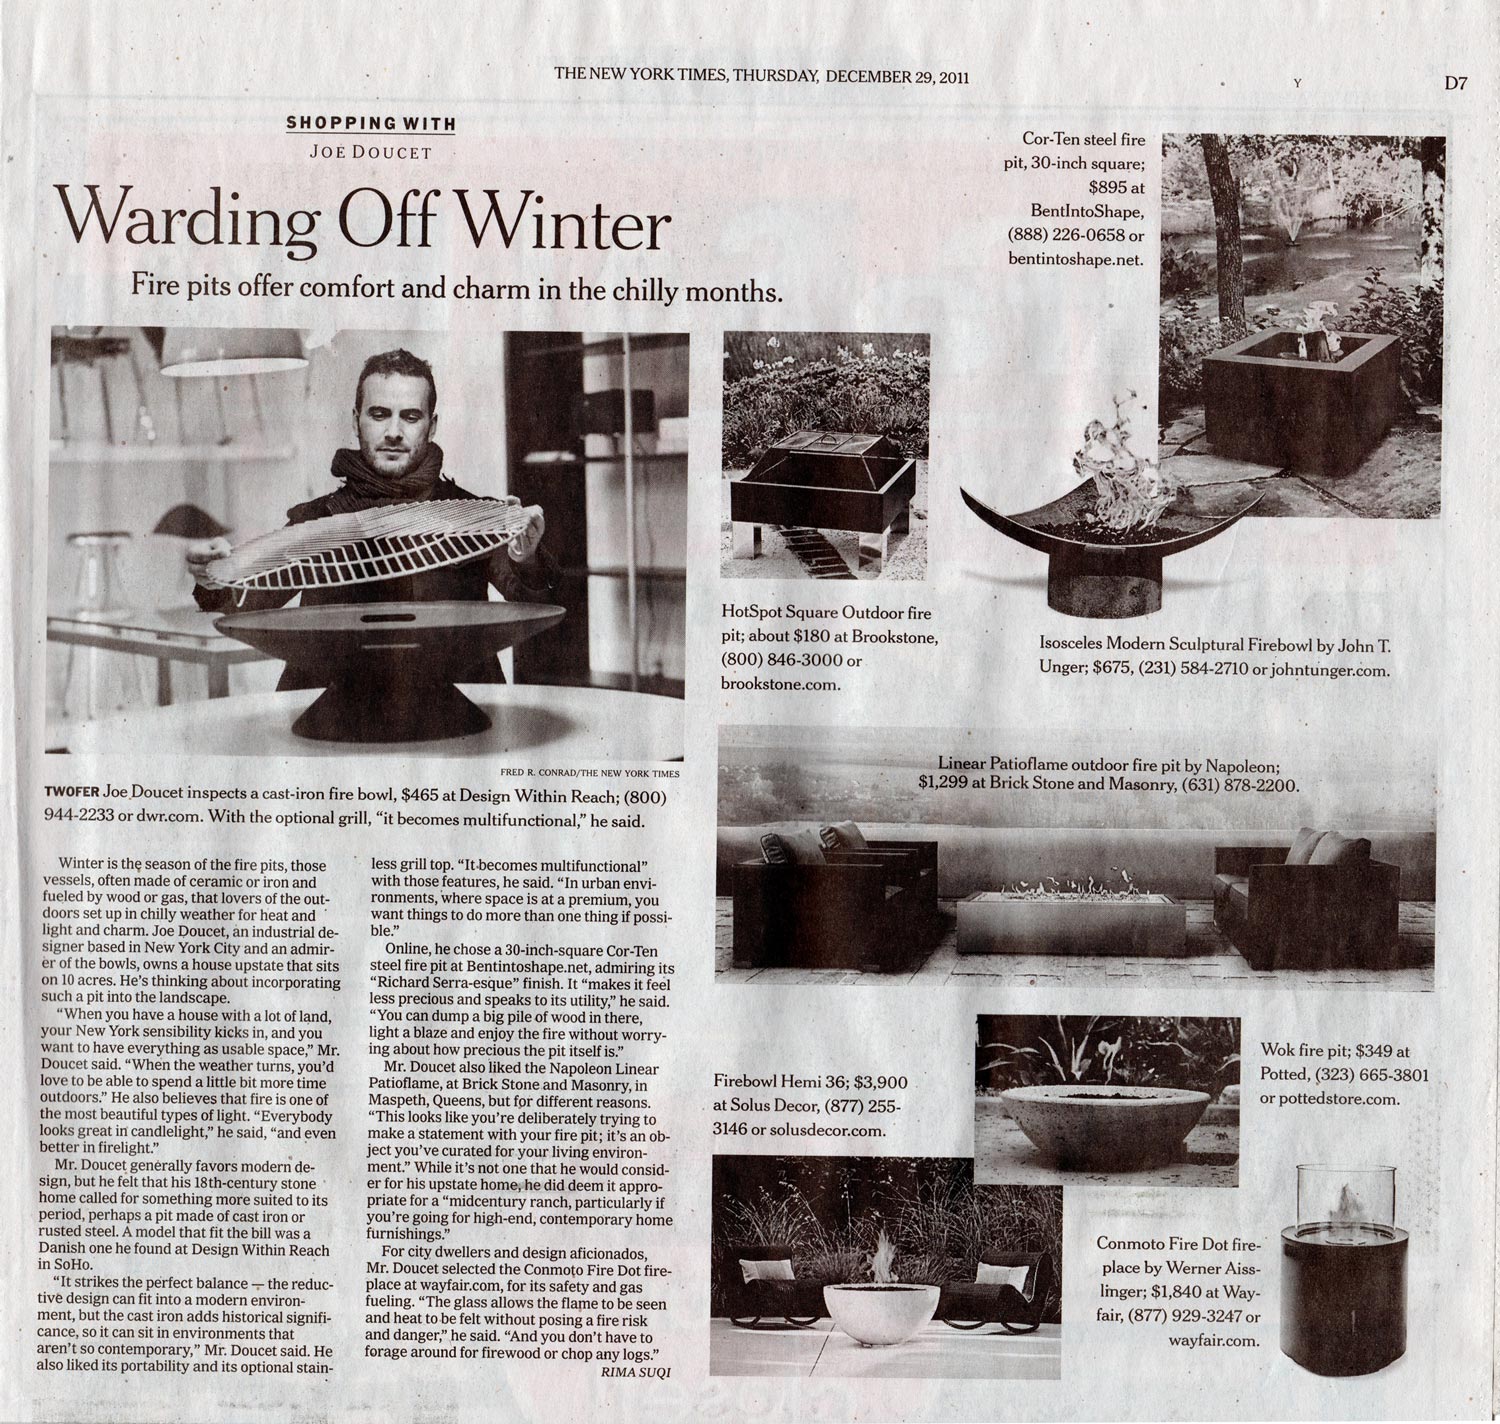 Suqi, Rima. "Warding Off Winter." The New York Times 29 Dec. 2011: D1-D7. Print. 